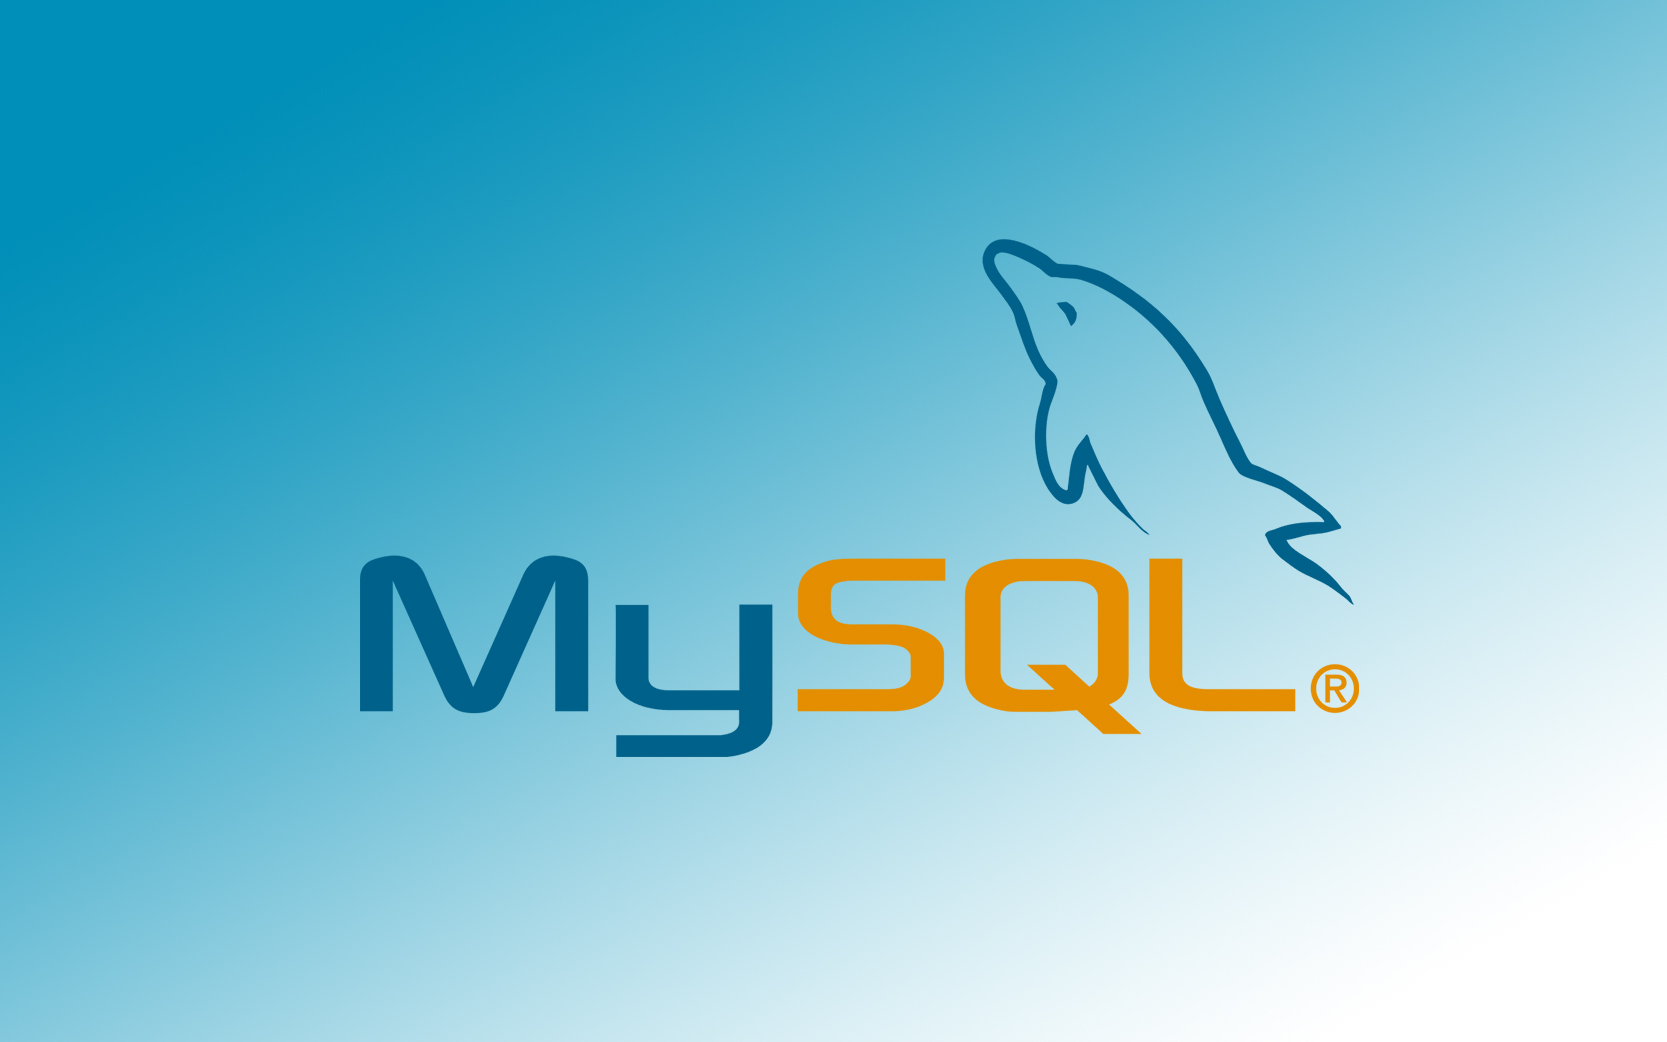 MySQL-training-in-bangalore-by-zekelabs